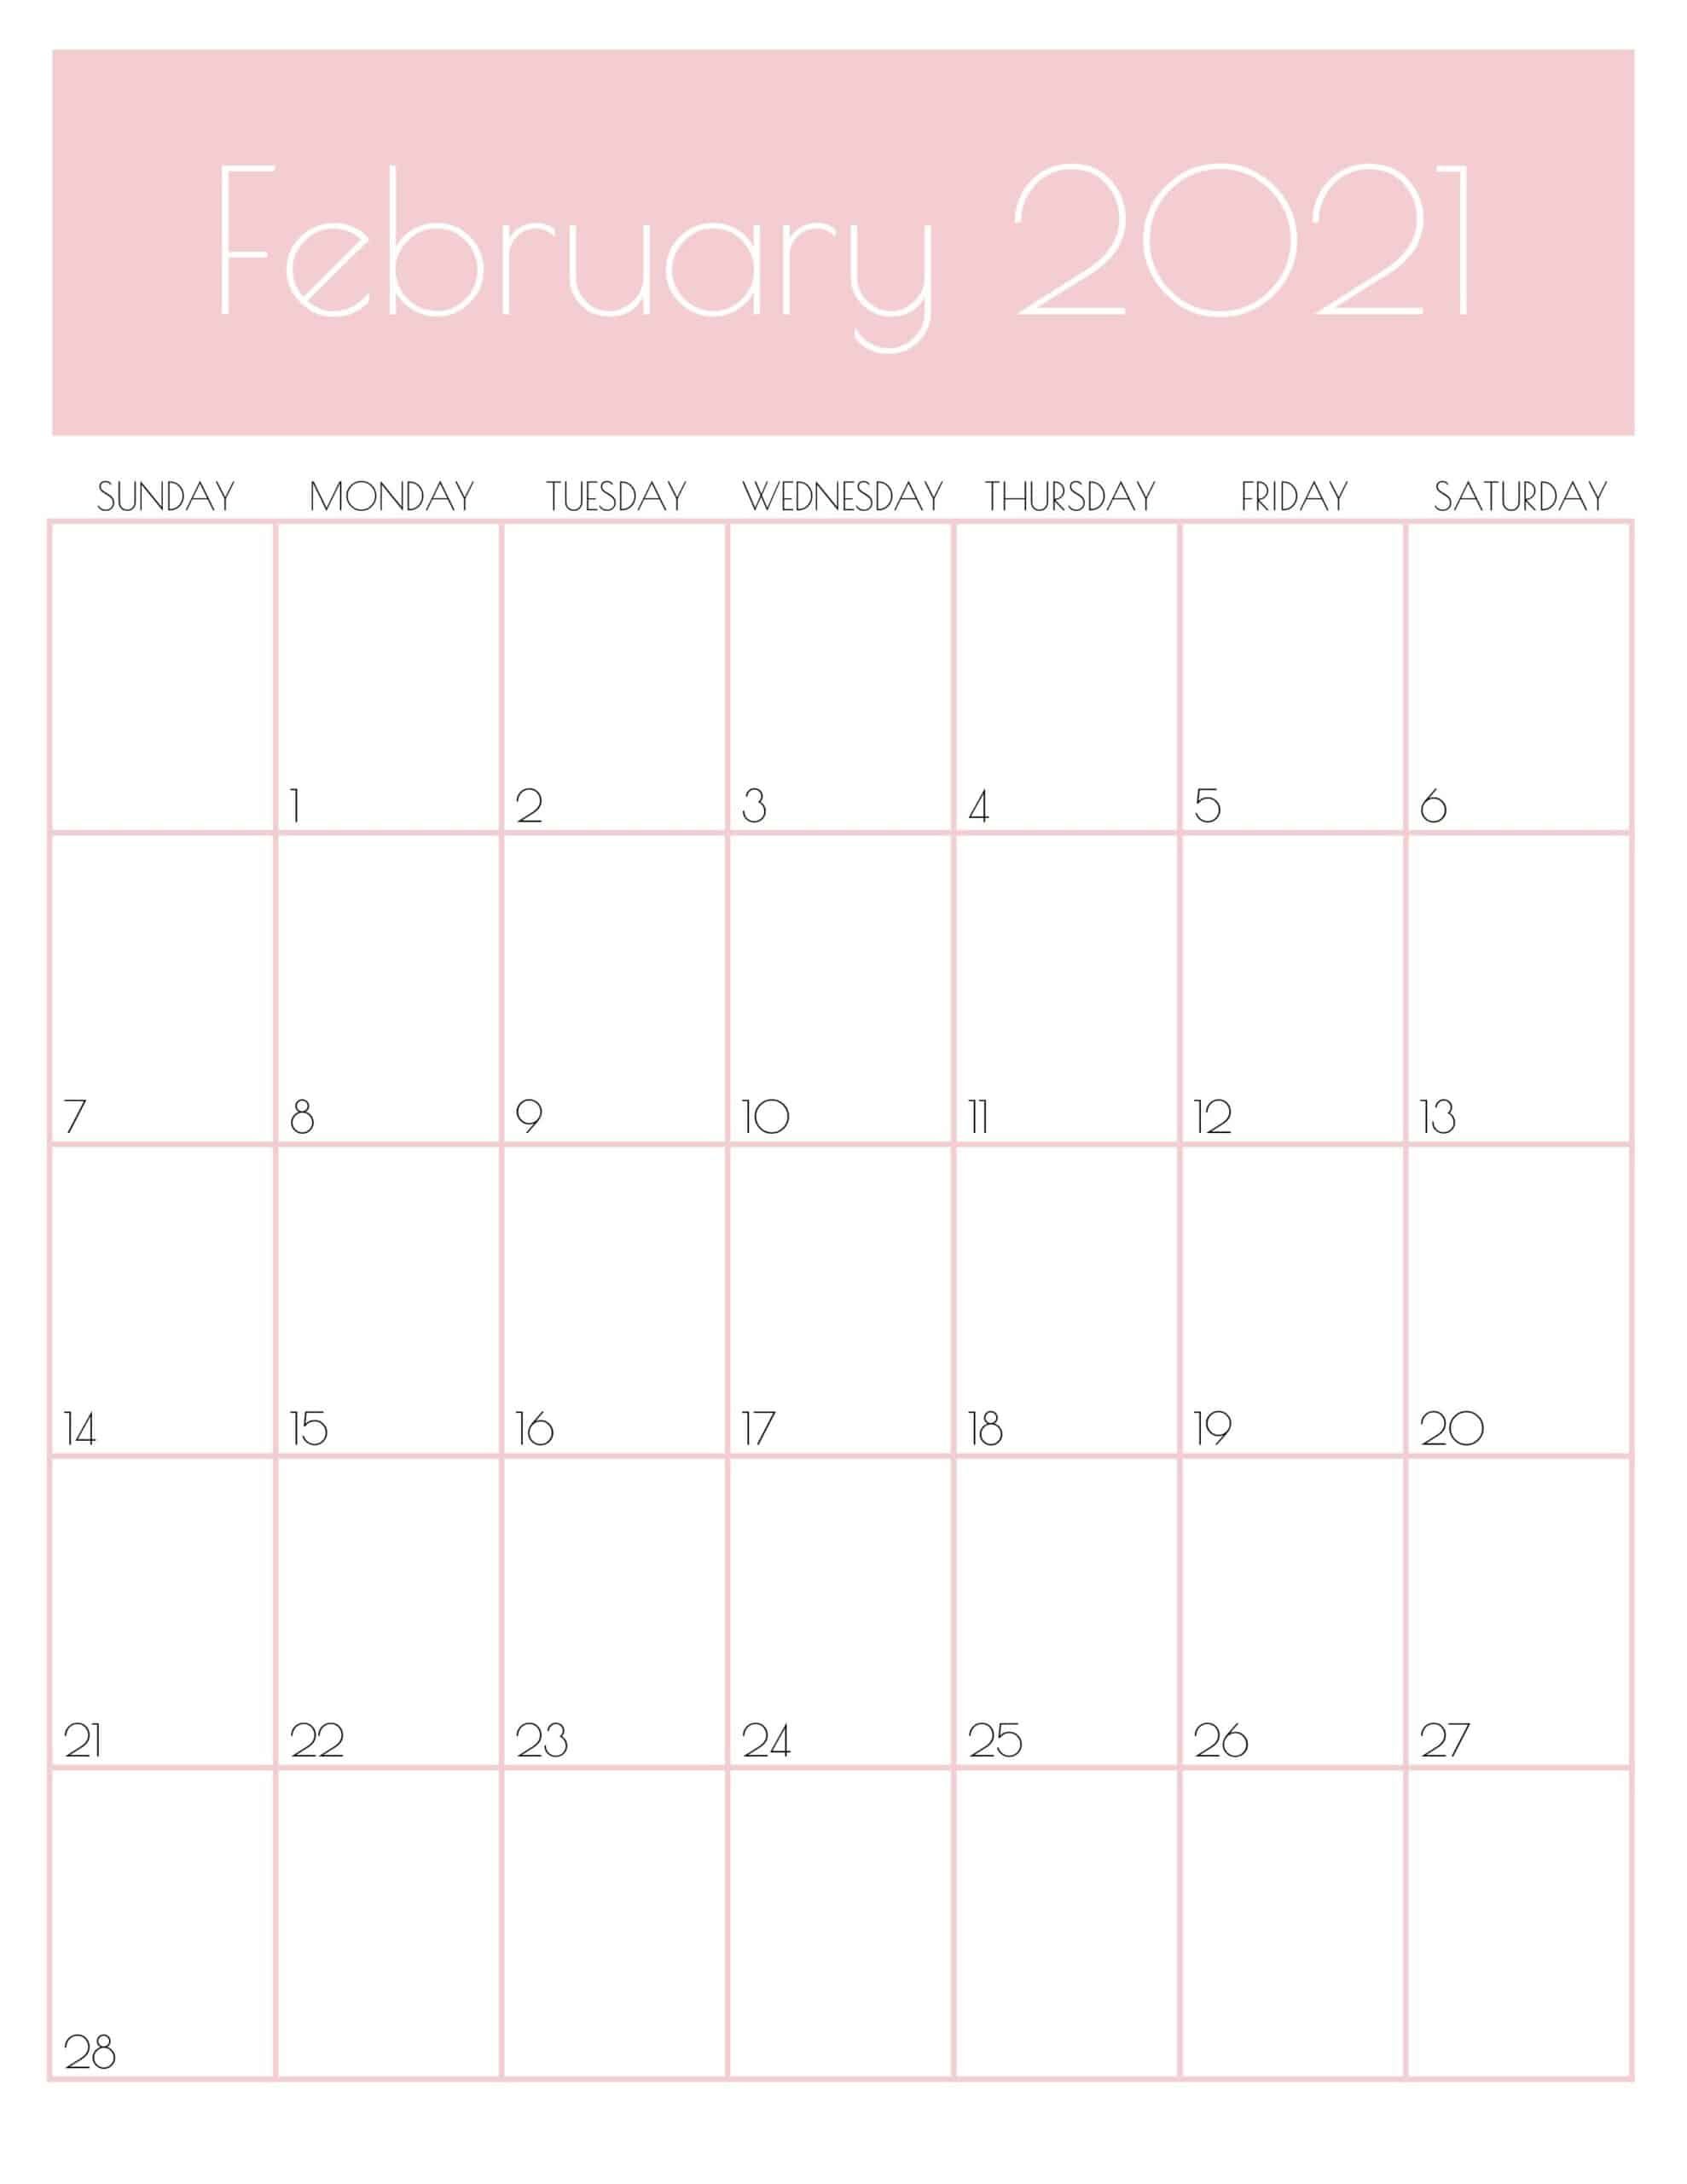 Featured image of post Calendar Wallpaper February 2021 Calendar : Free printable february 2021 calendar.